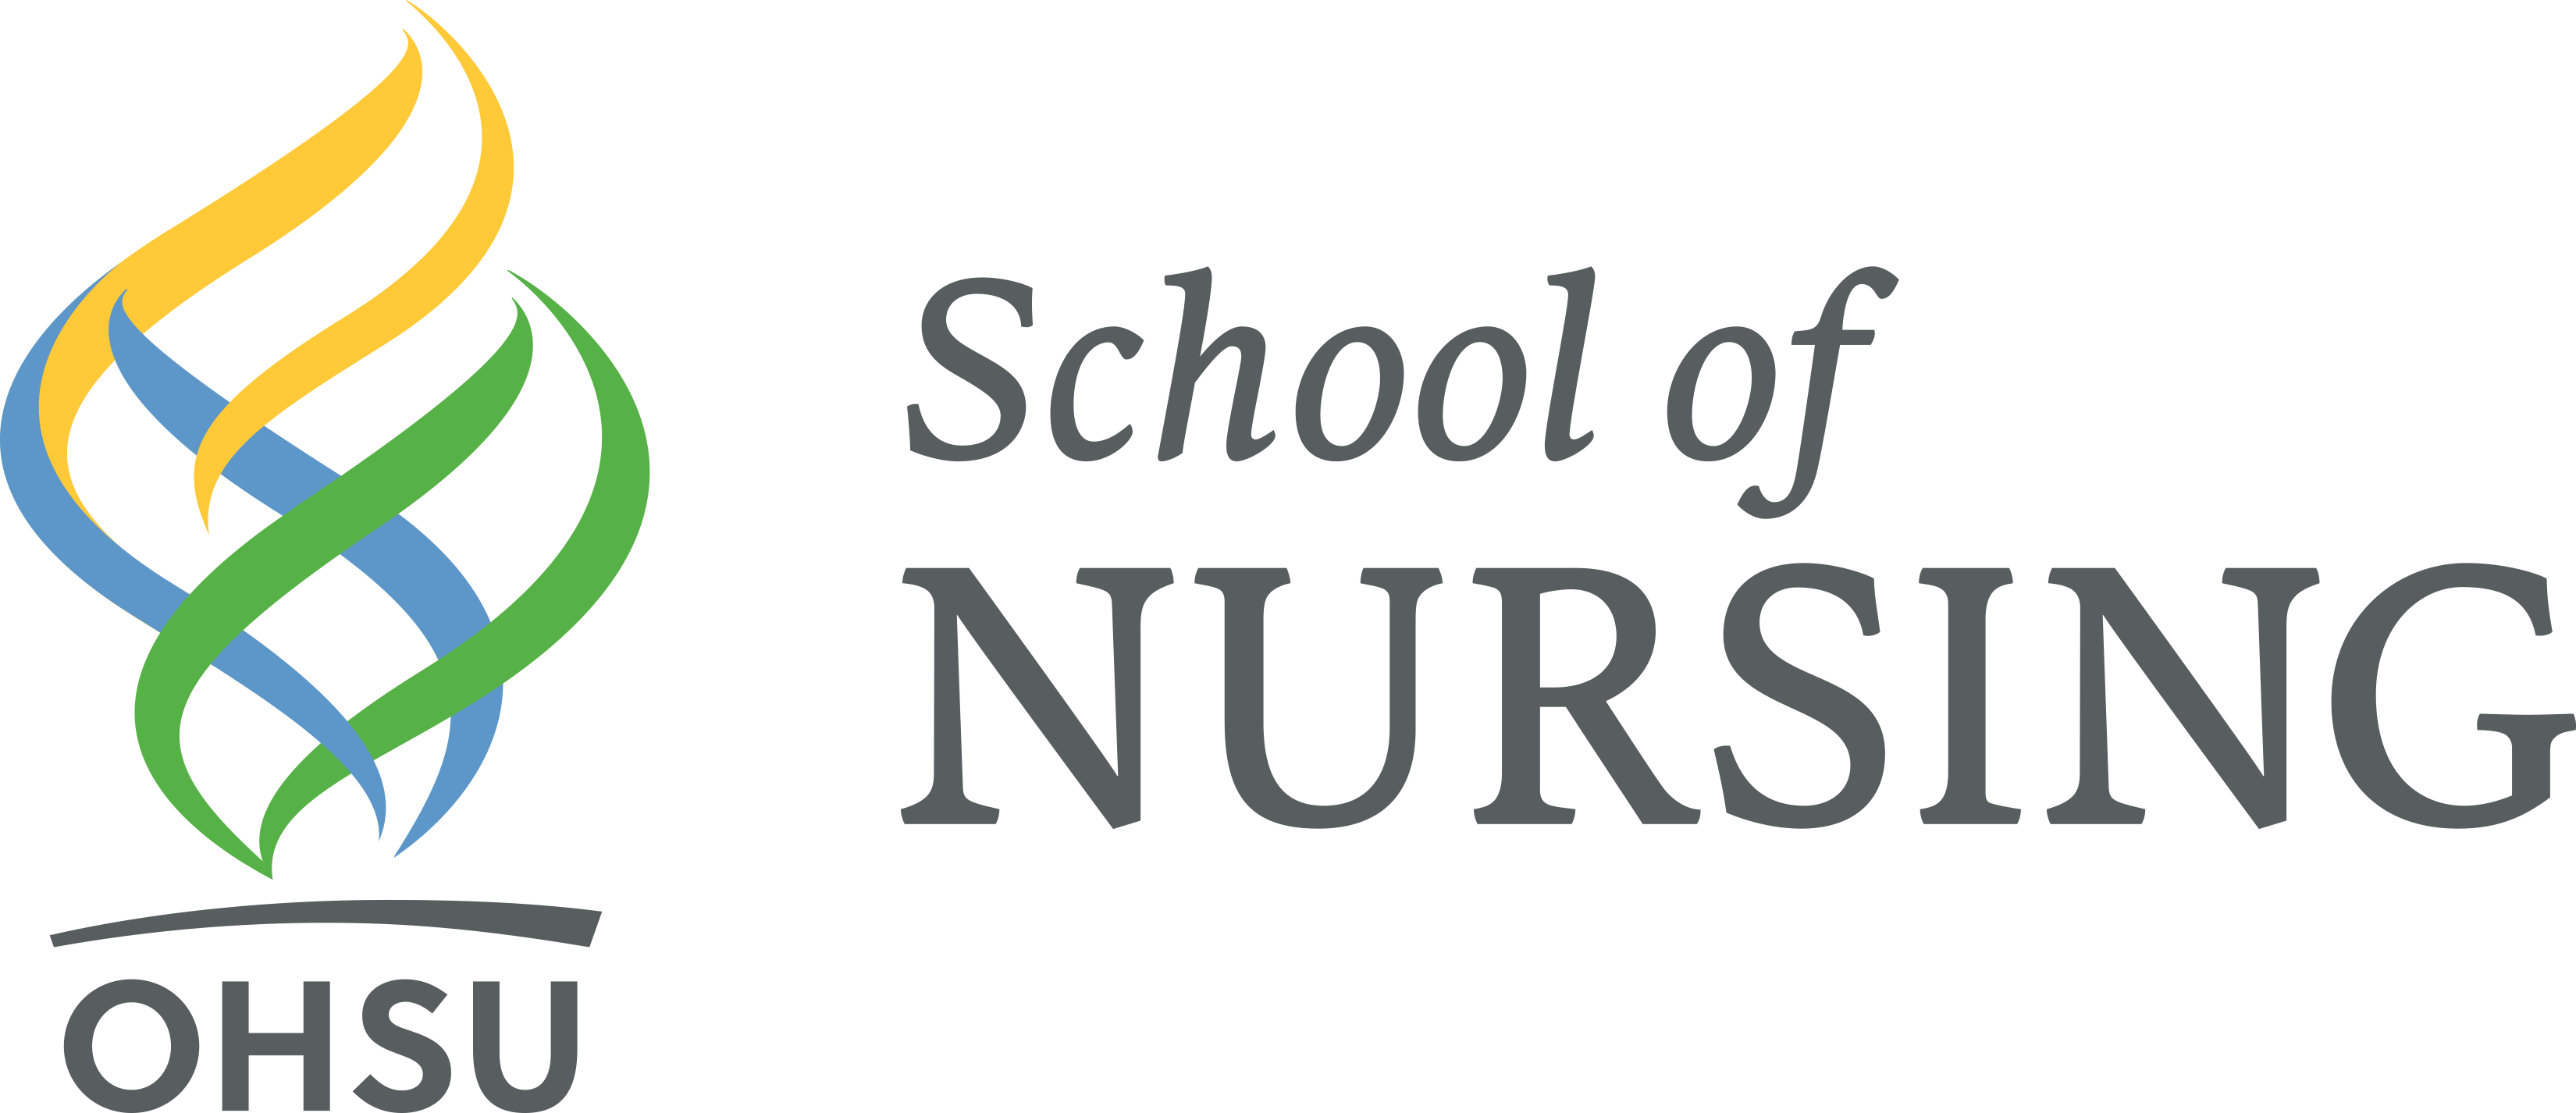 School of Nursing OHSU